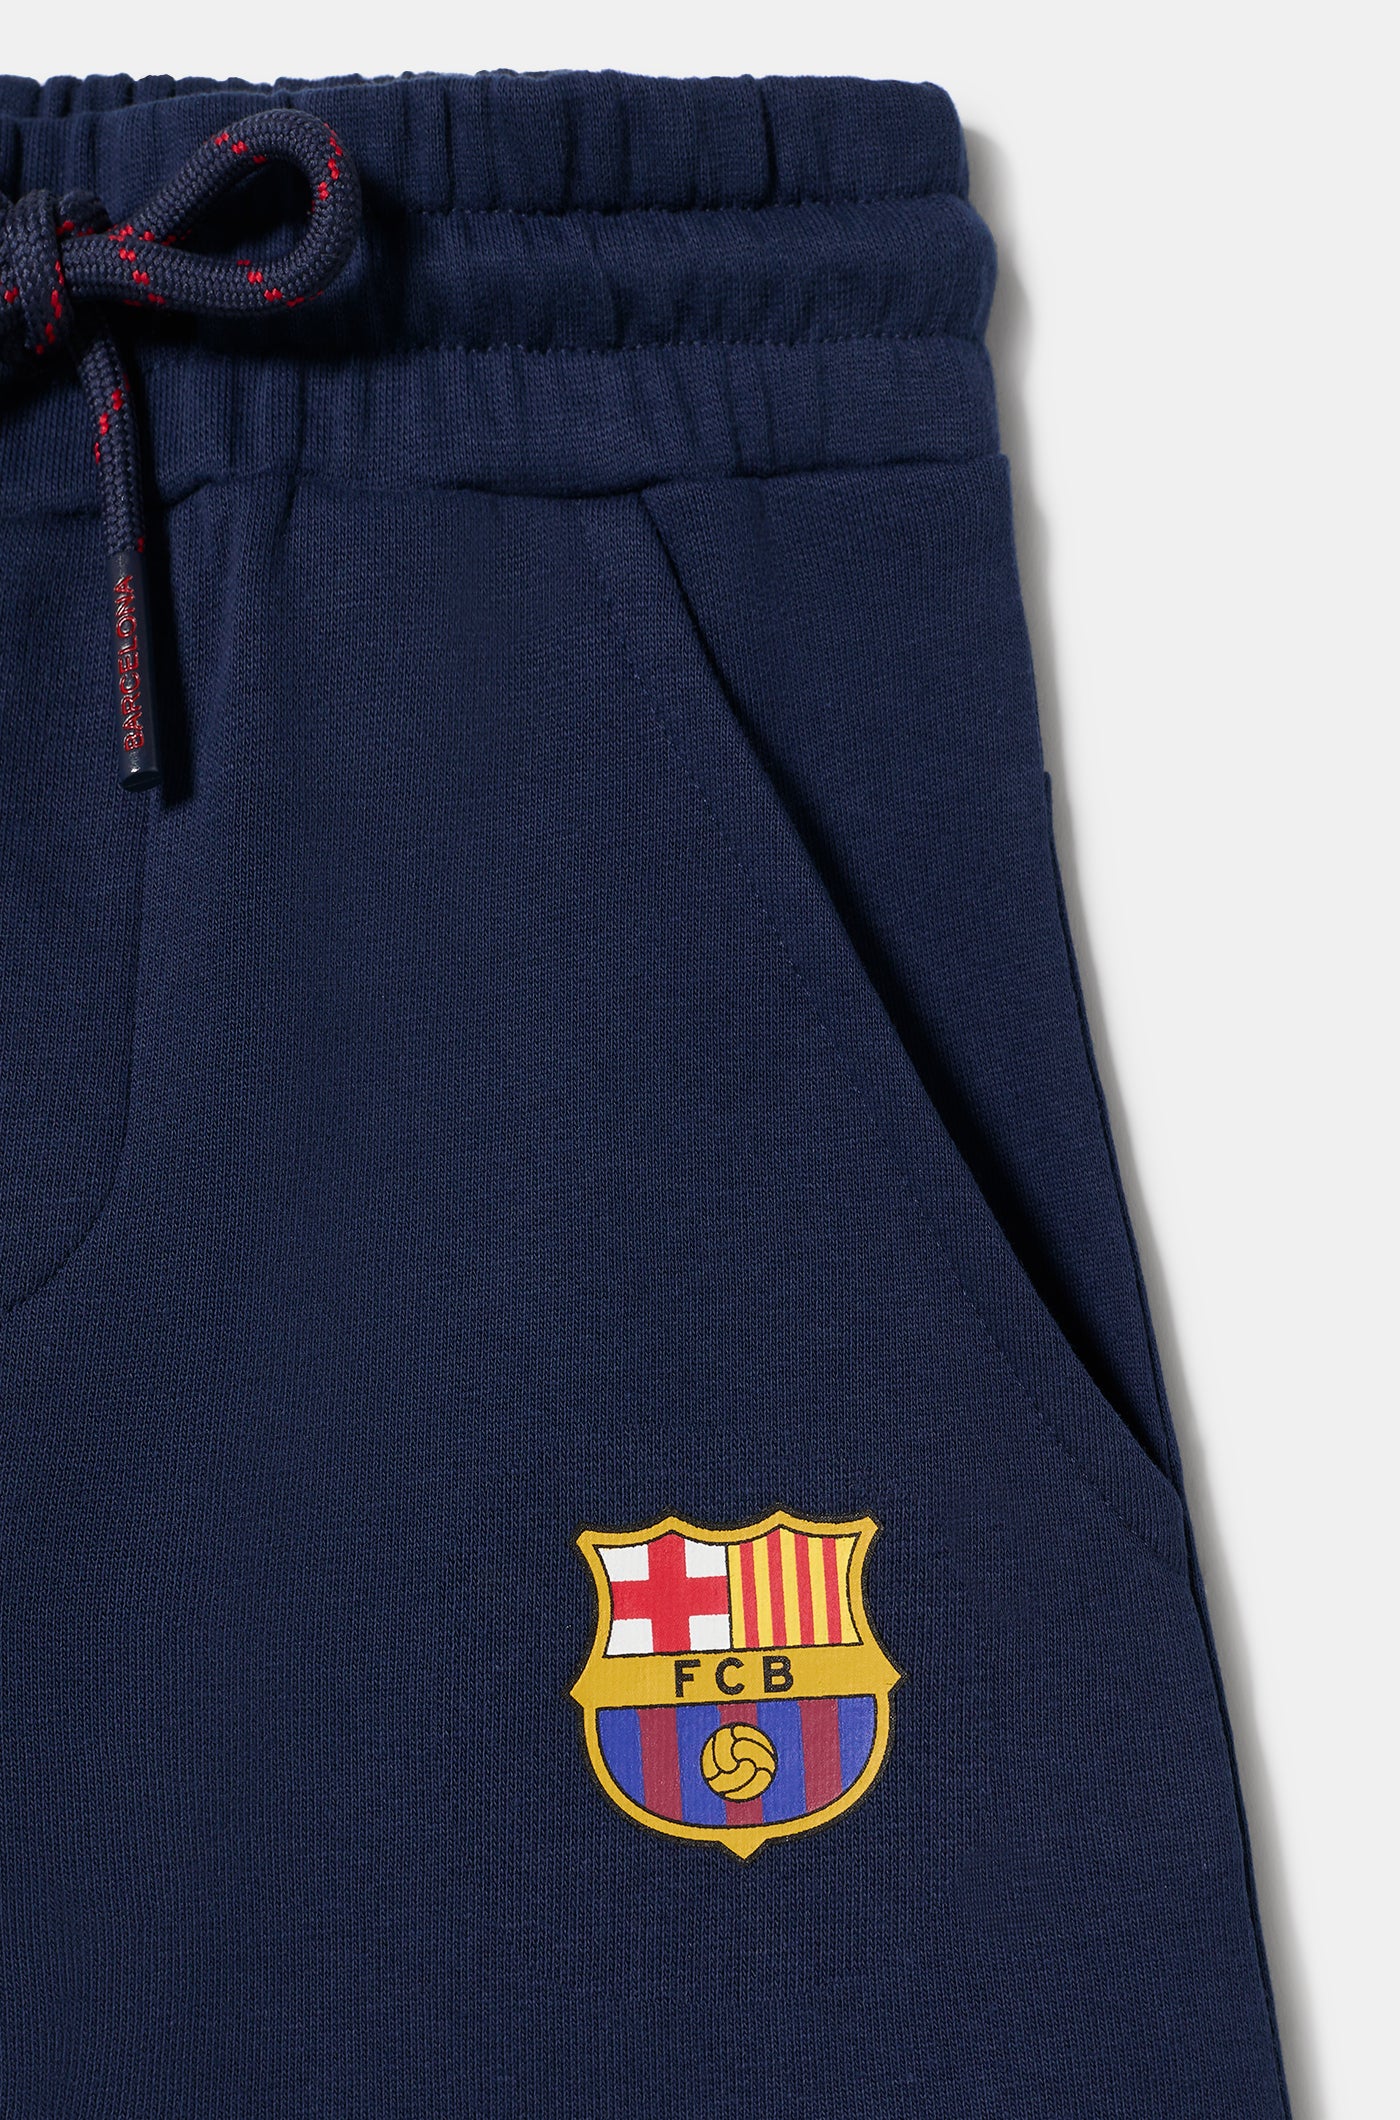 Dunkelblaue Jogginghose mit Barça-Emblem - Junior